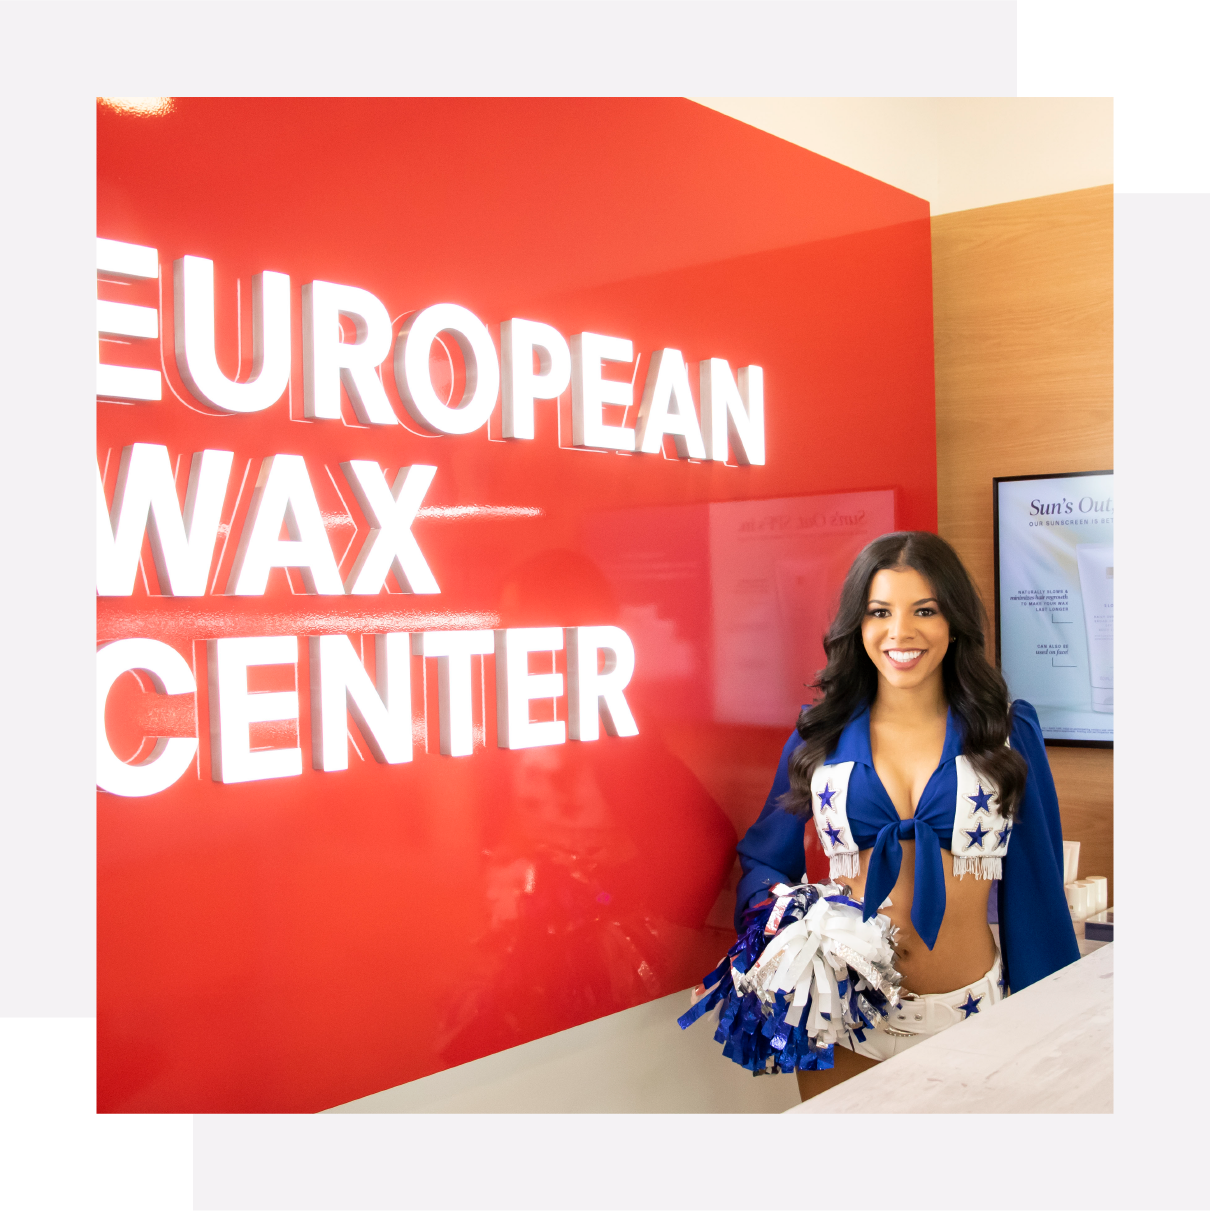 woman smiling next to European Wax Center log